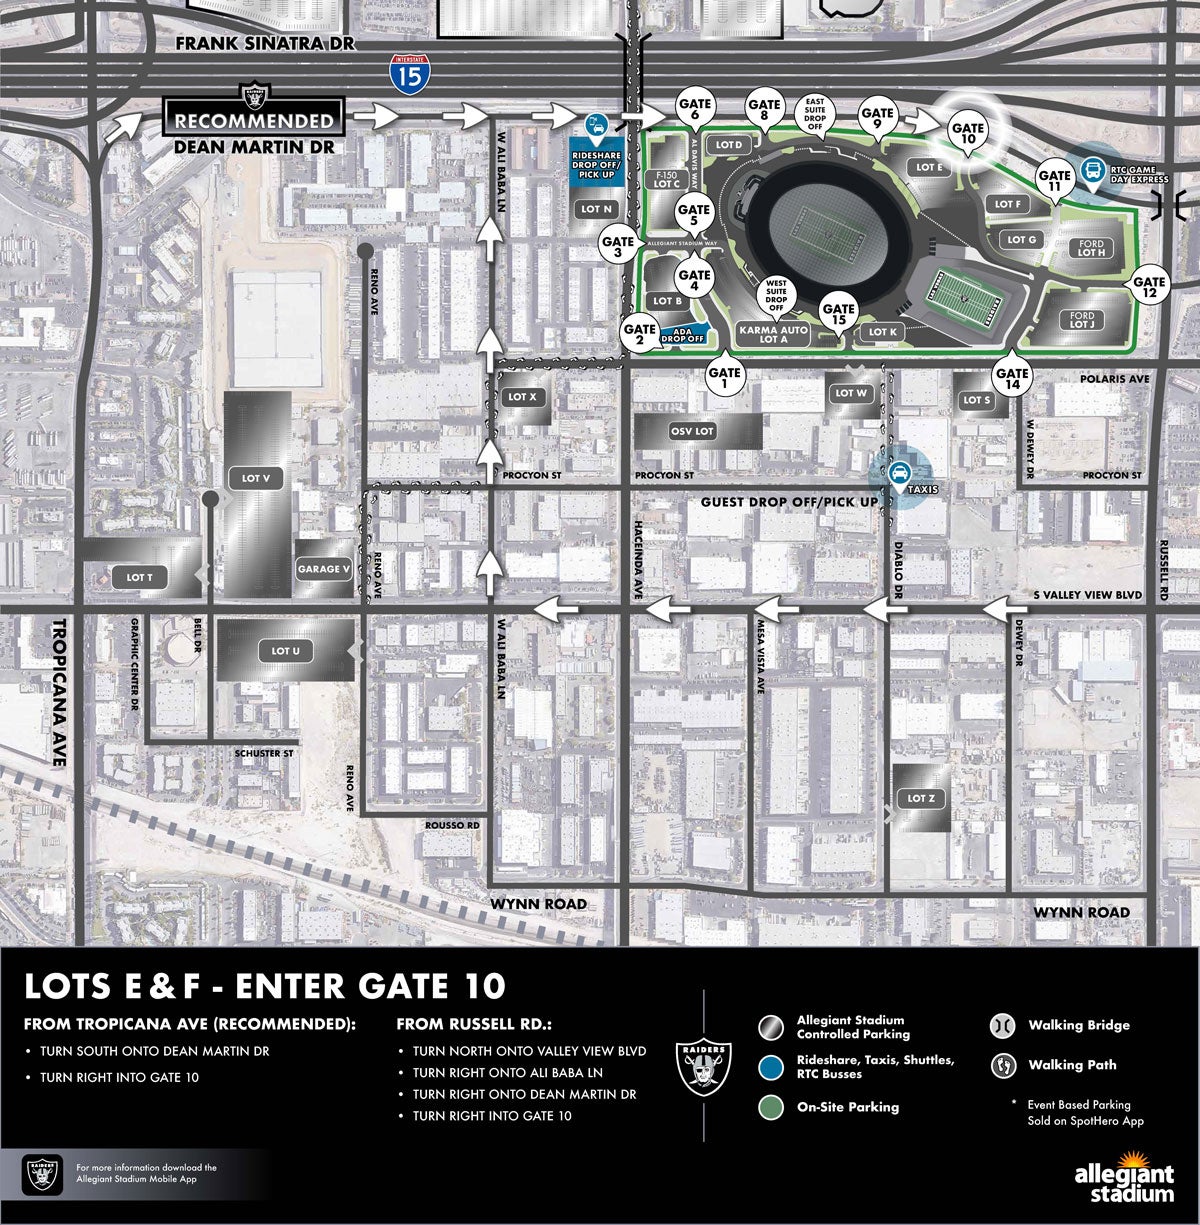 Lots E & F Parking Map - Enter Gate 10